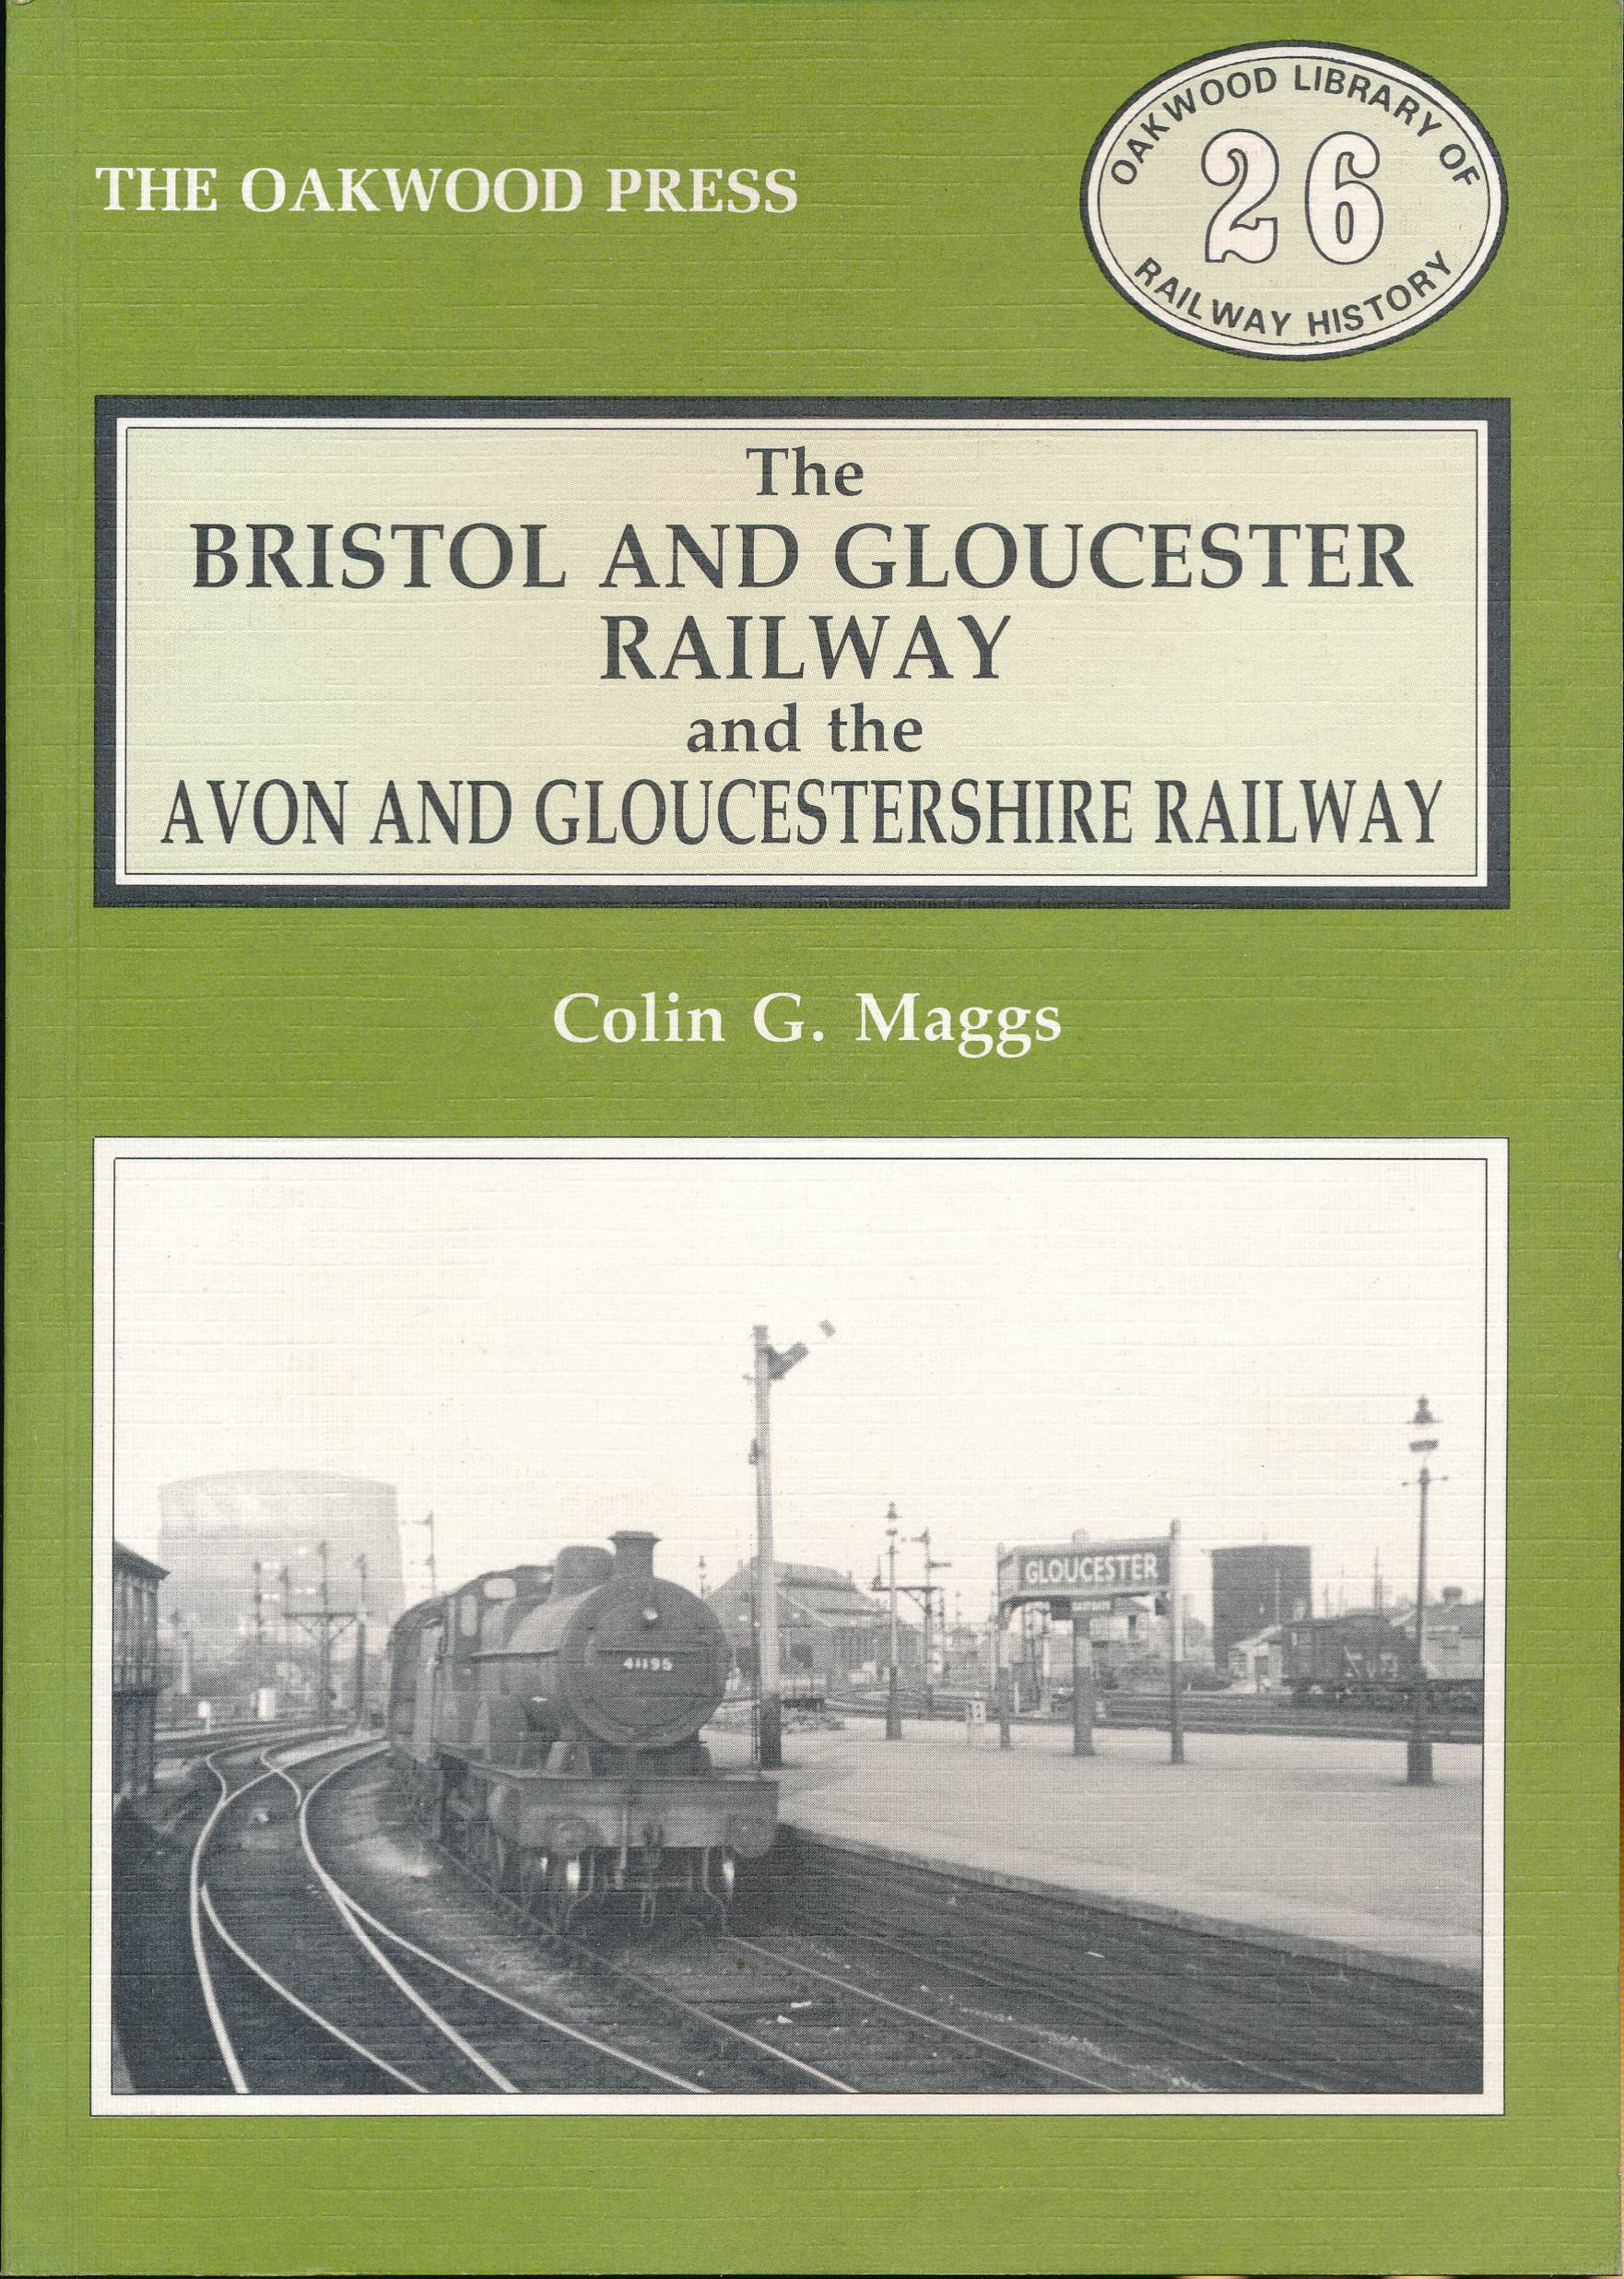 The Bristol and Gloucester Railway. Oakwood Railway History No 26.